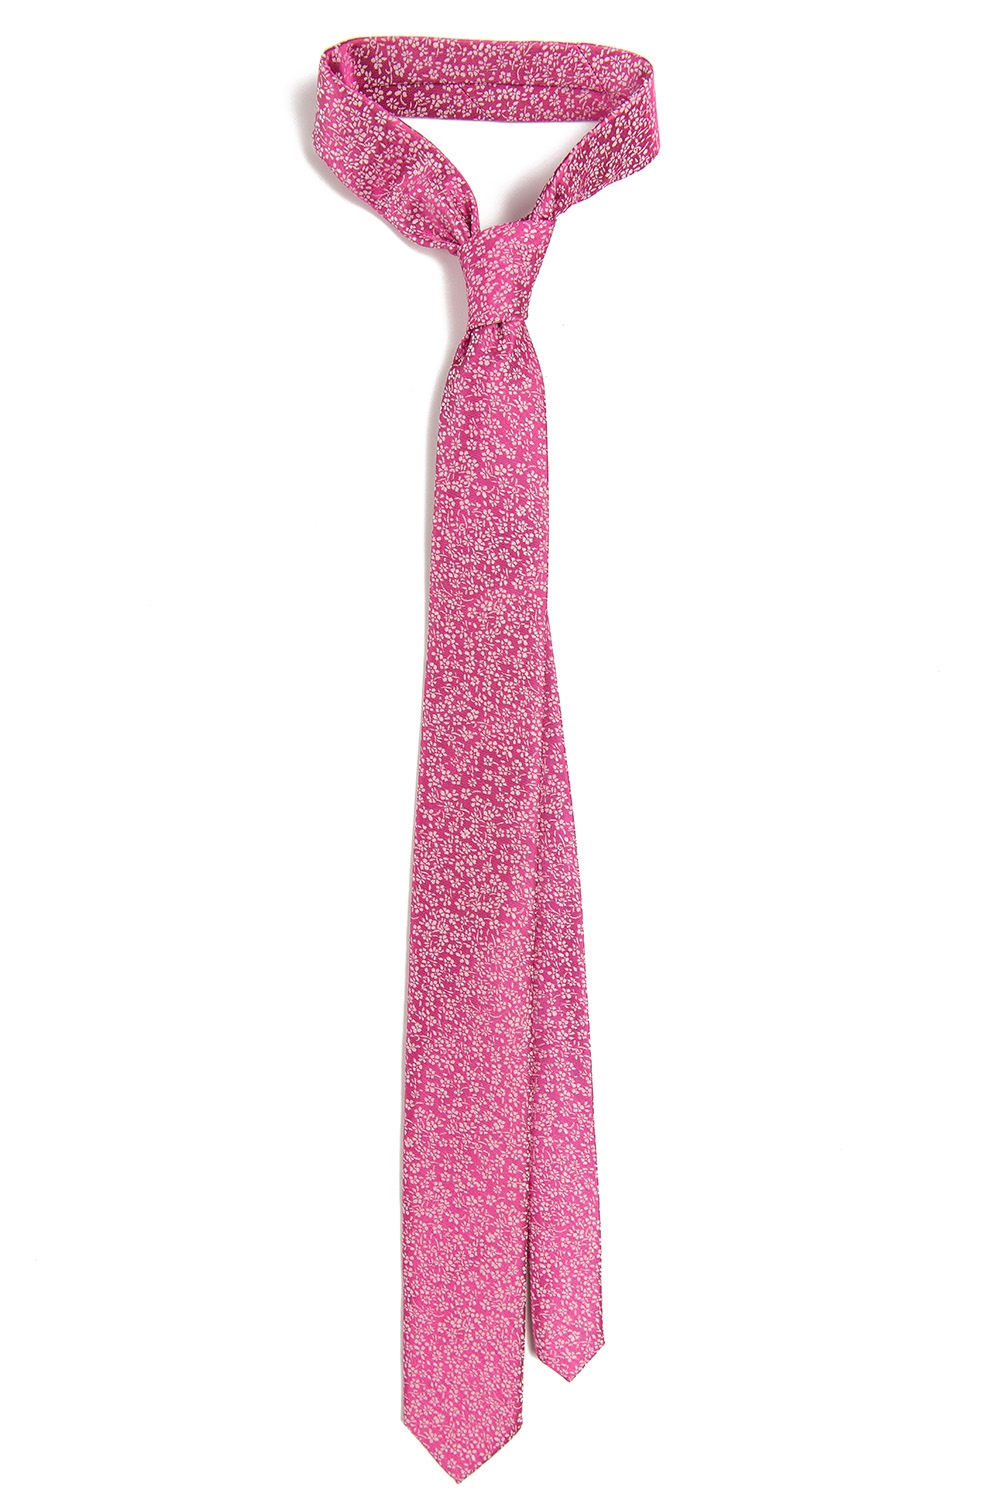 Cravata poliester roz print floral 0